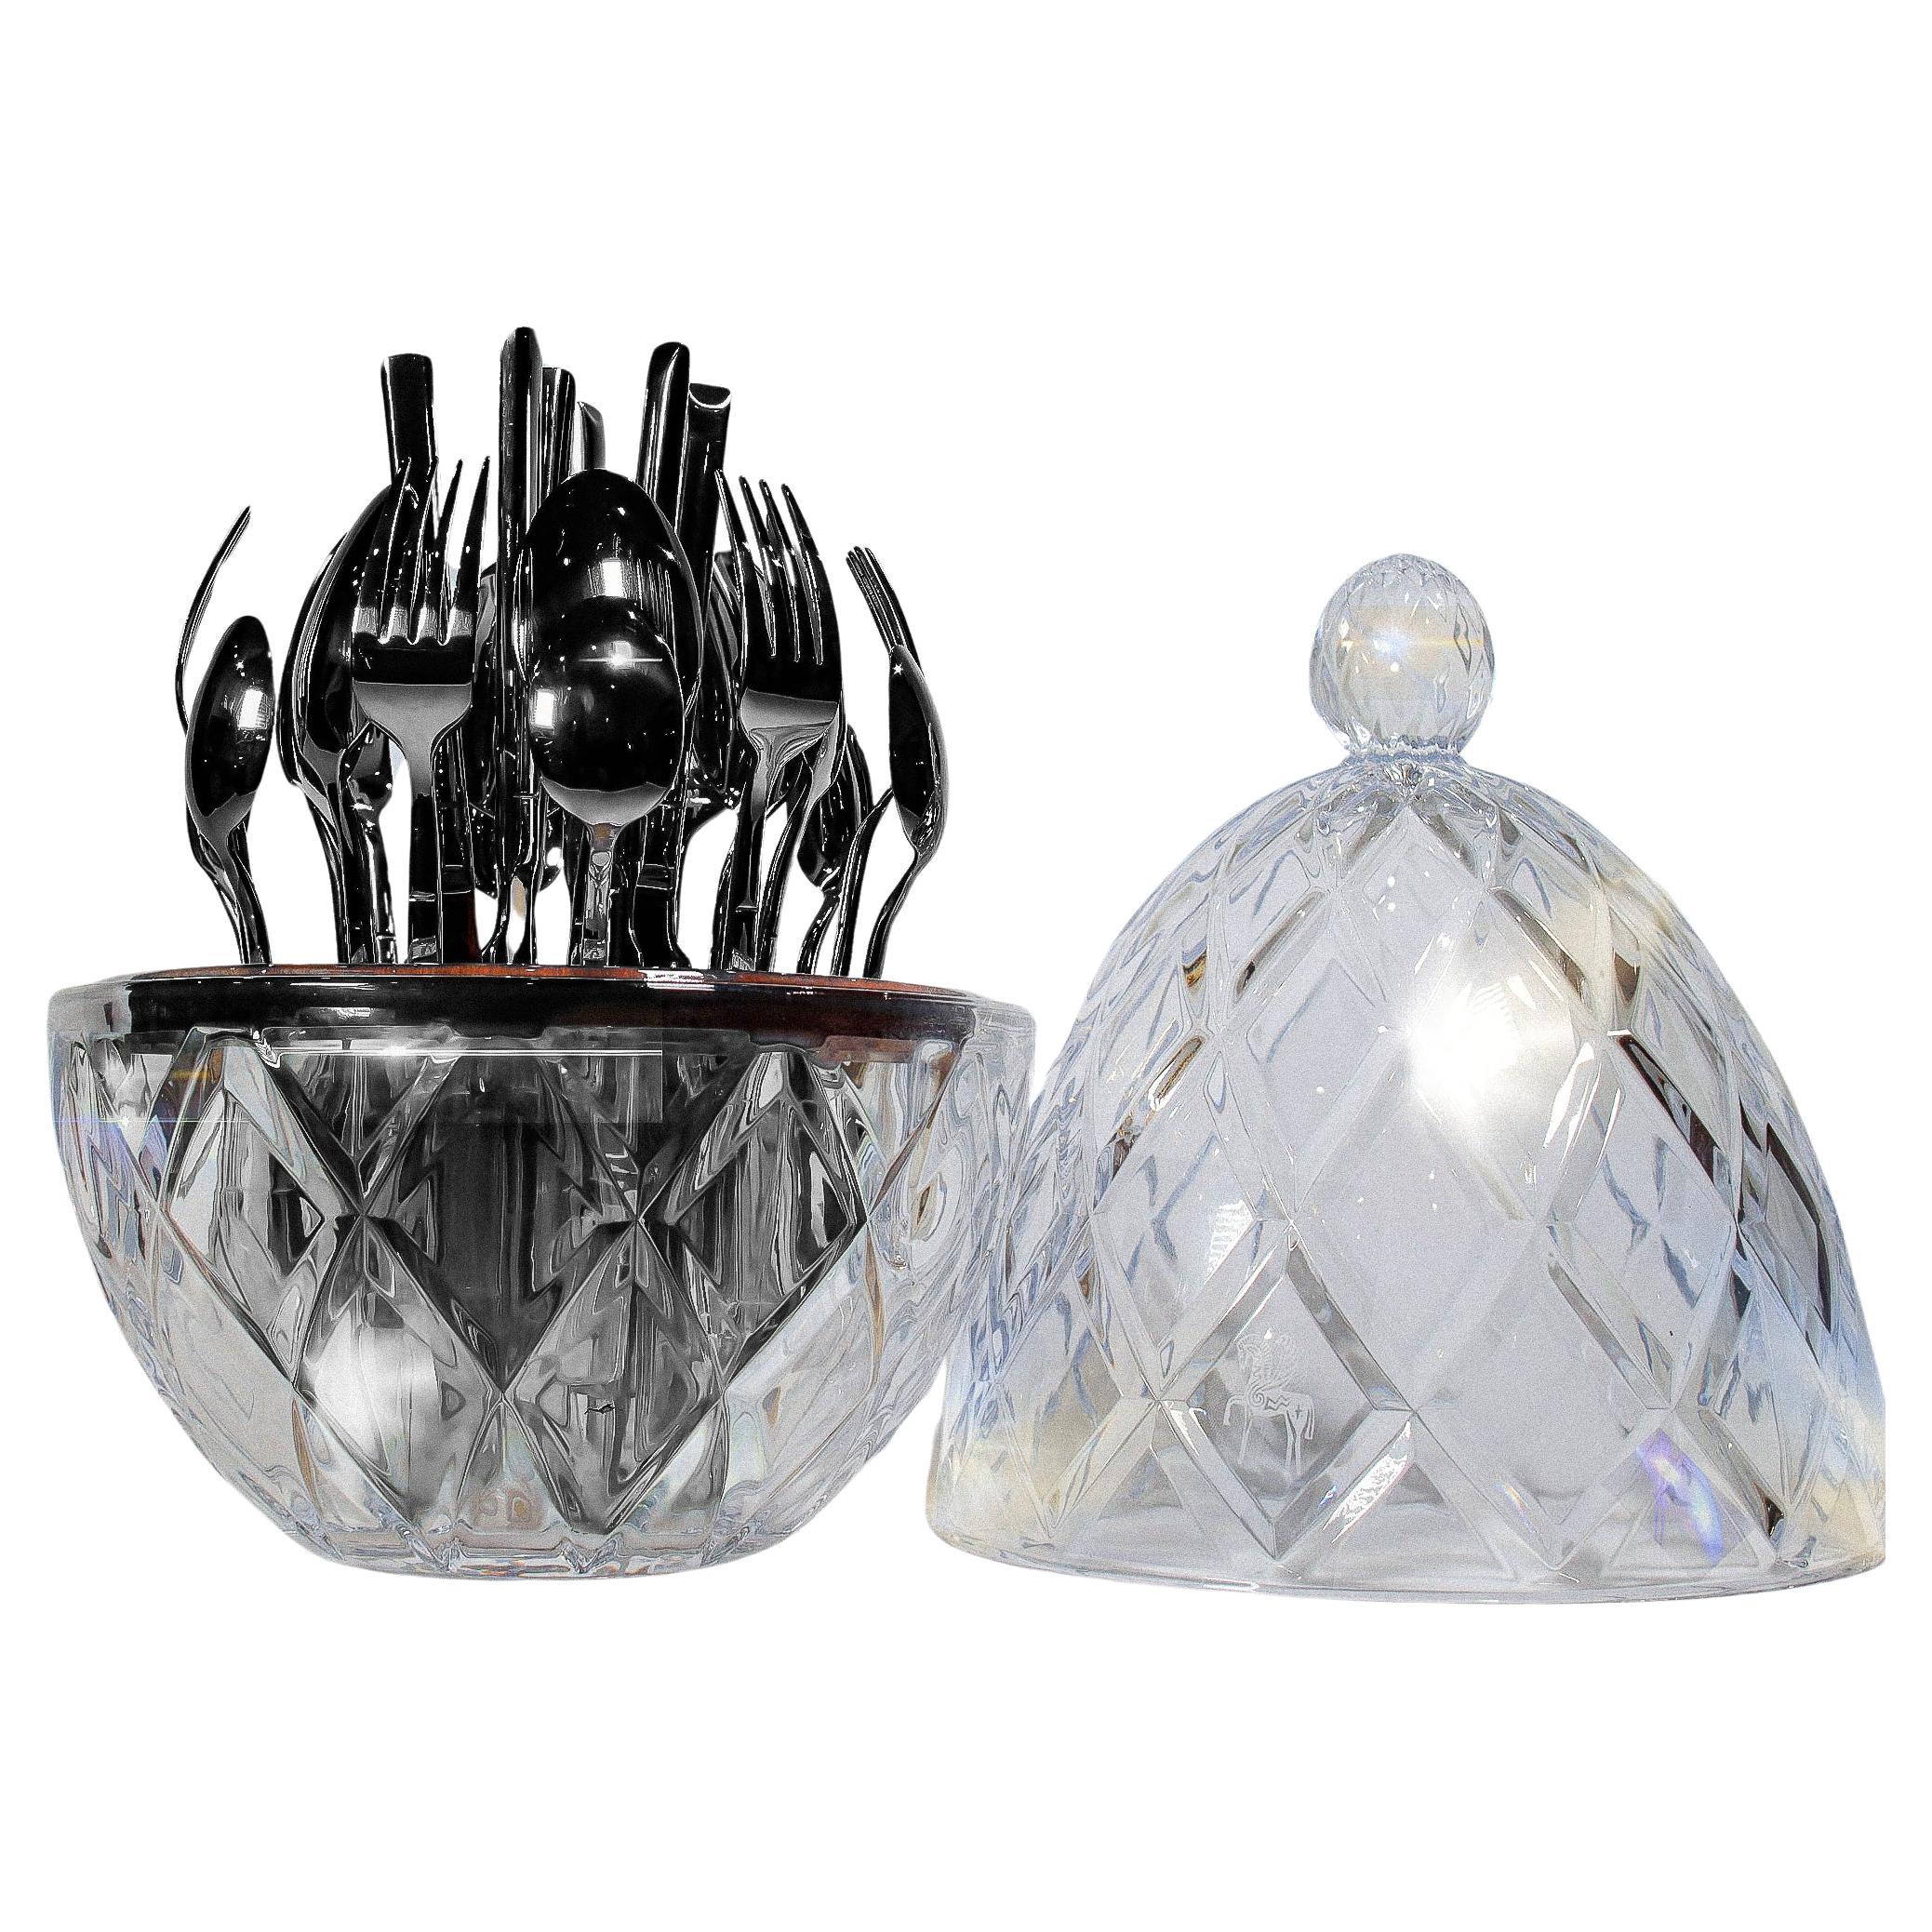 24-piece Silverware Set in Crystal Glass Egg Case L’ambrosia 24-piece Silverware For Sale